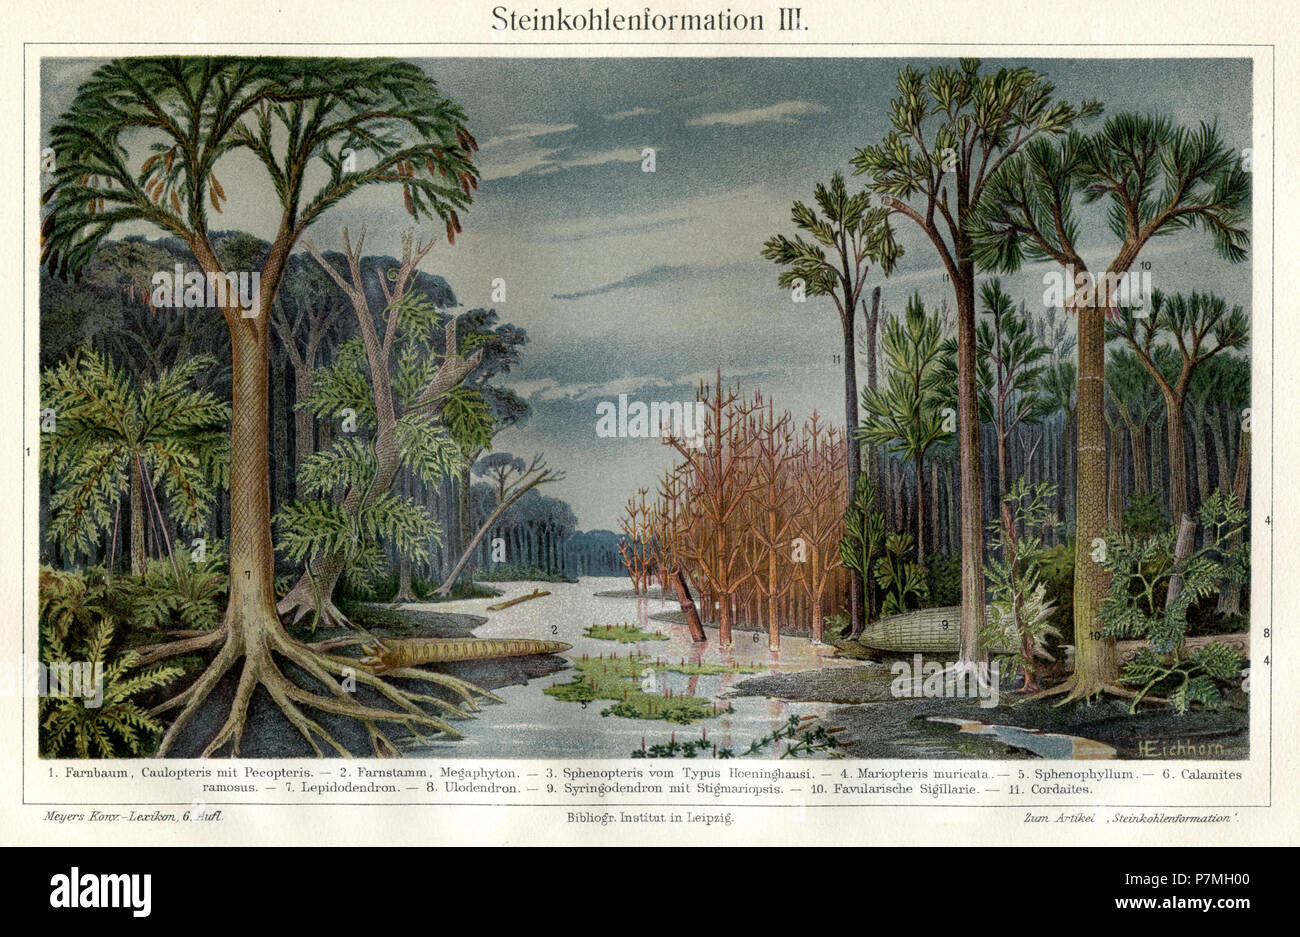 Landscape of the coalcorn time. 1. Fern tree, Caulopteris with pecopteria. 2. fern trunk, megaphyton. 3. Sphenopteris of the Hoeninghausi type. 4. Mariopteris muricala.5. Sphivnophyllum. 6. Calamites ramosus. 7. Lepidodendron. 8. Ulodendron. 9. Syringodendron with stigmariopsis. 10. Favular Sigularia.11. Cordaites., H Eichhorn Stock Photo